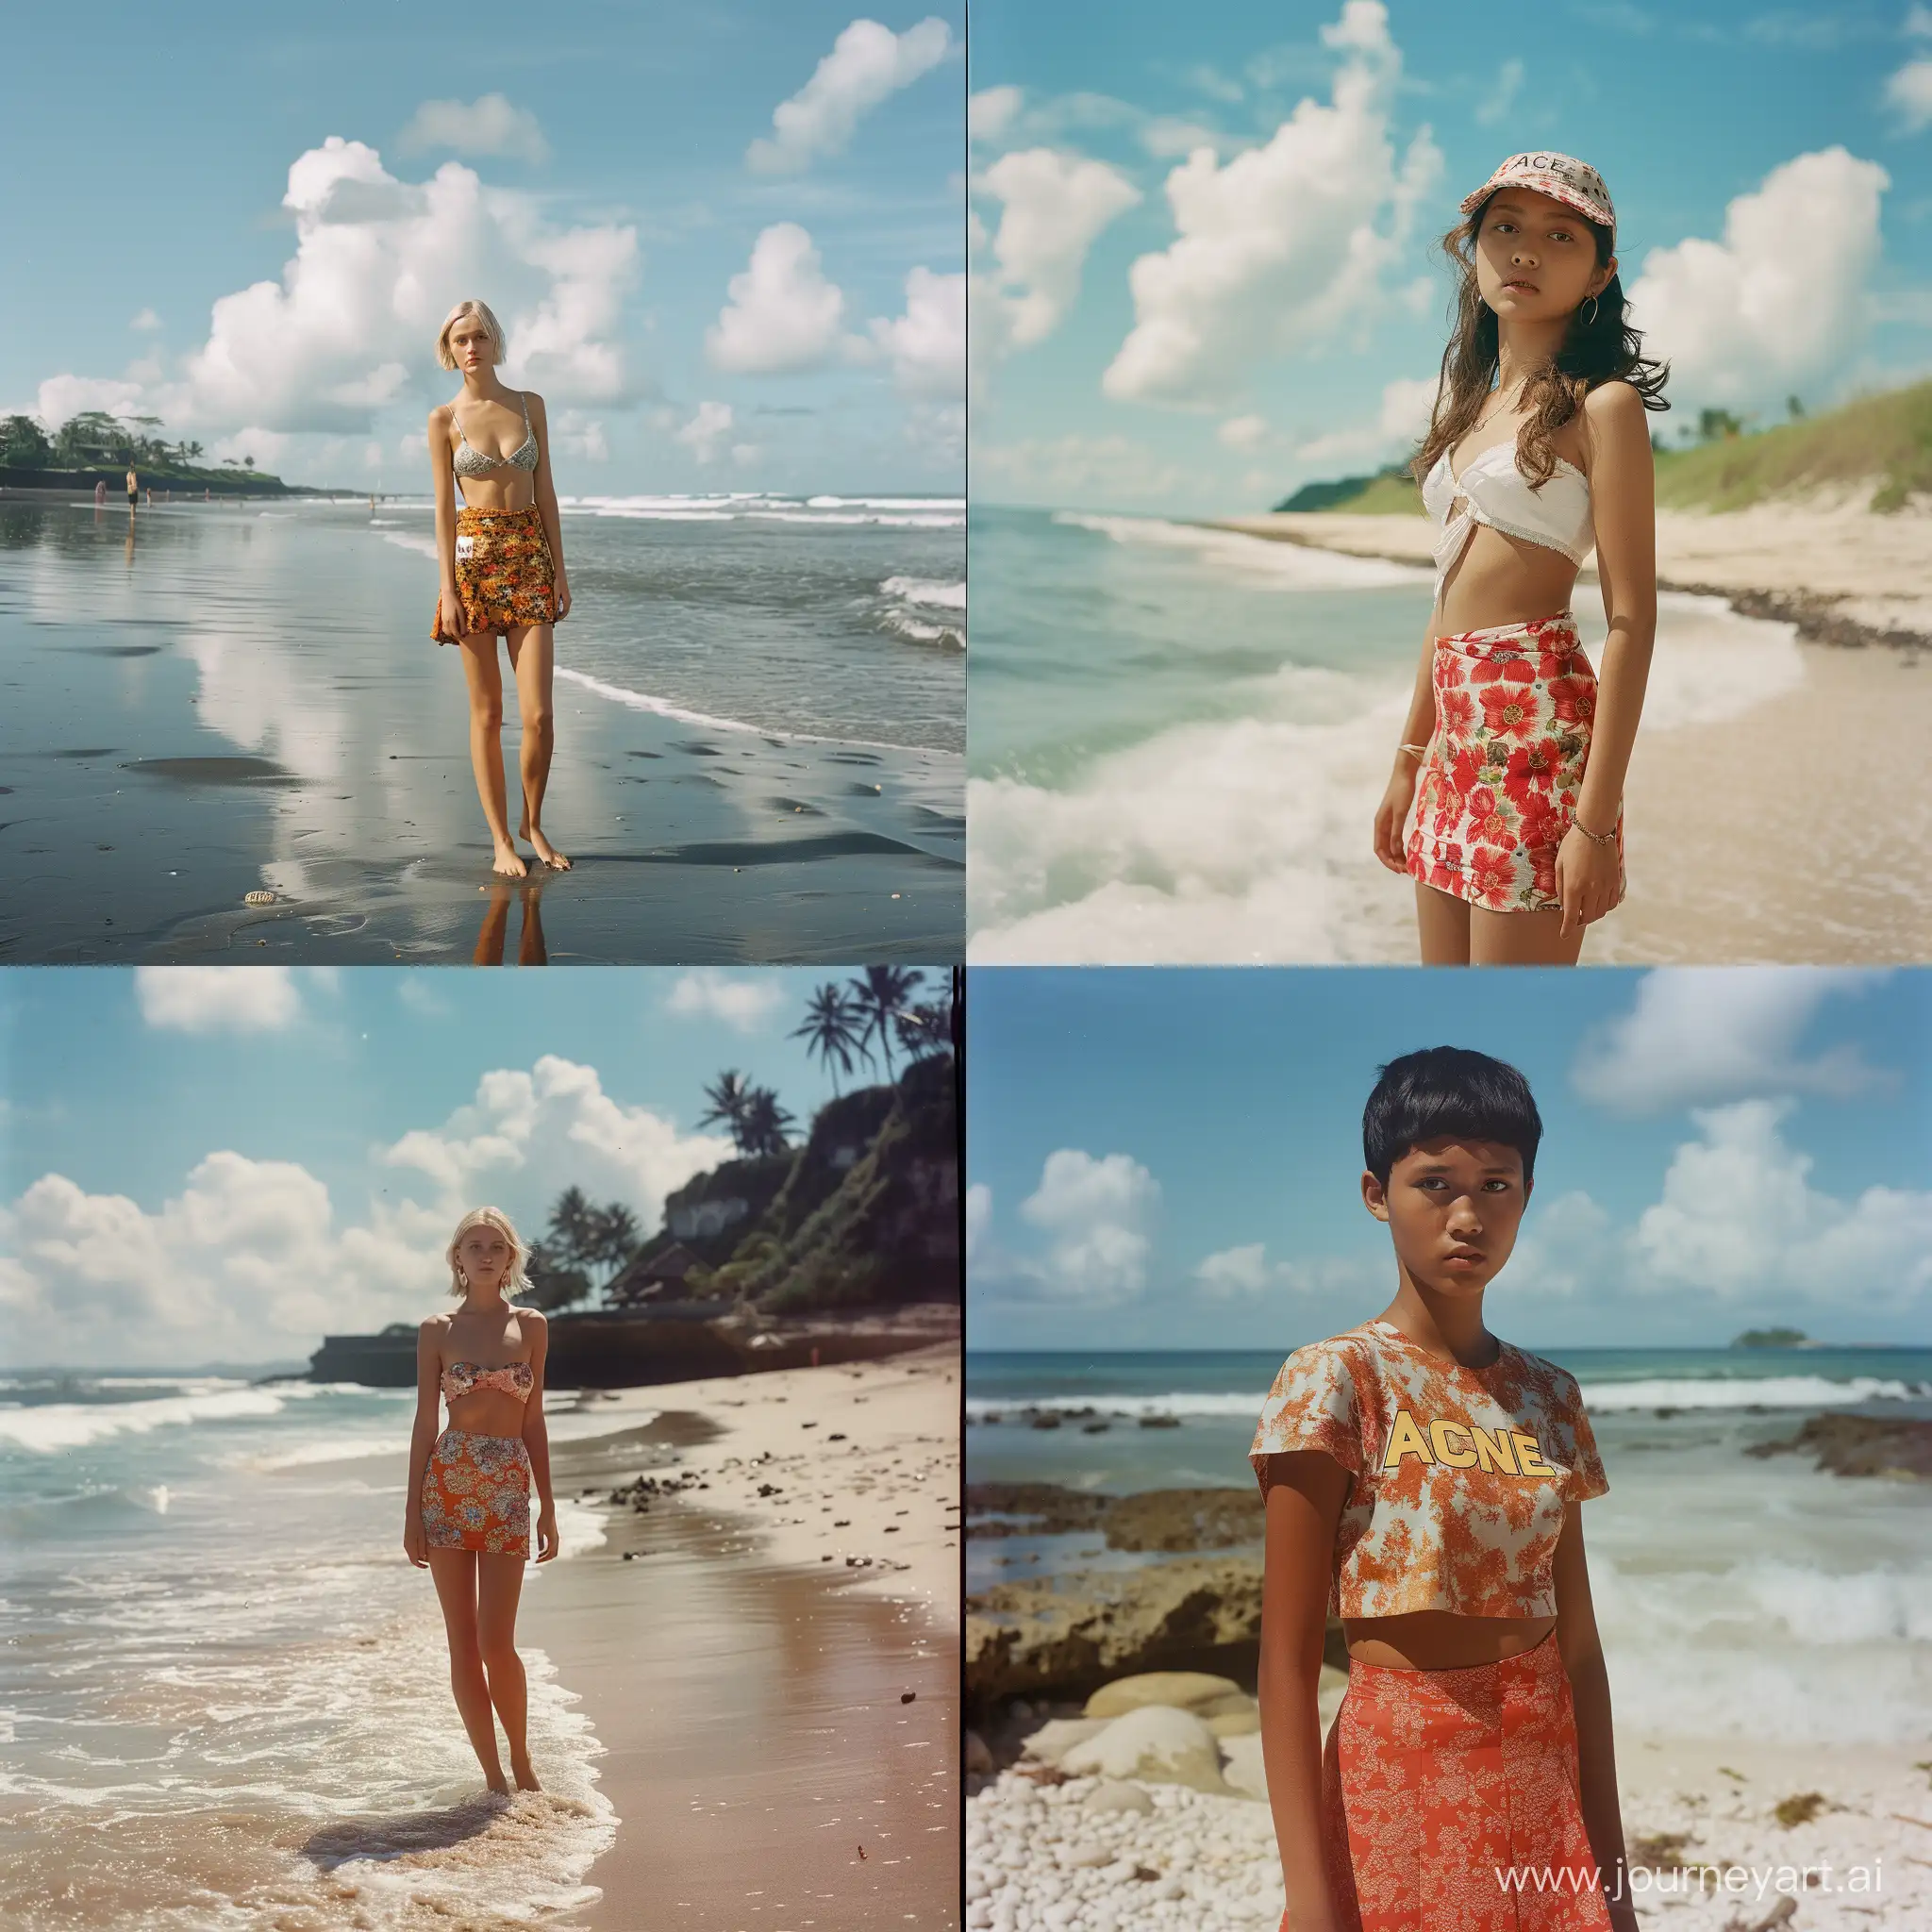 a analog photo of swedish fasion model wearing Acne skirt on beach in Bali